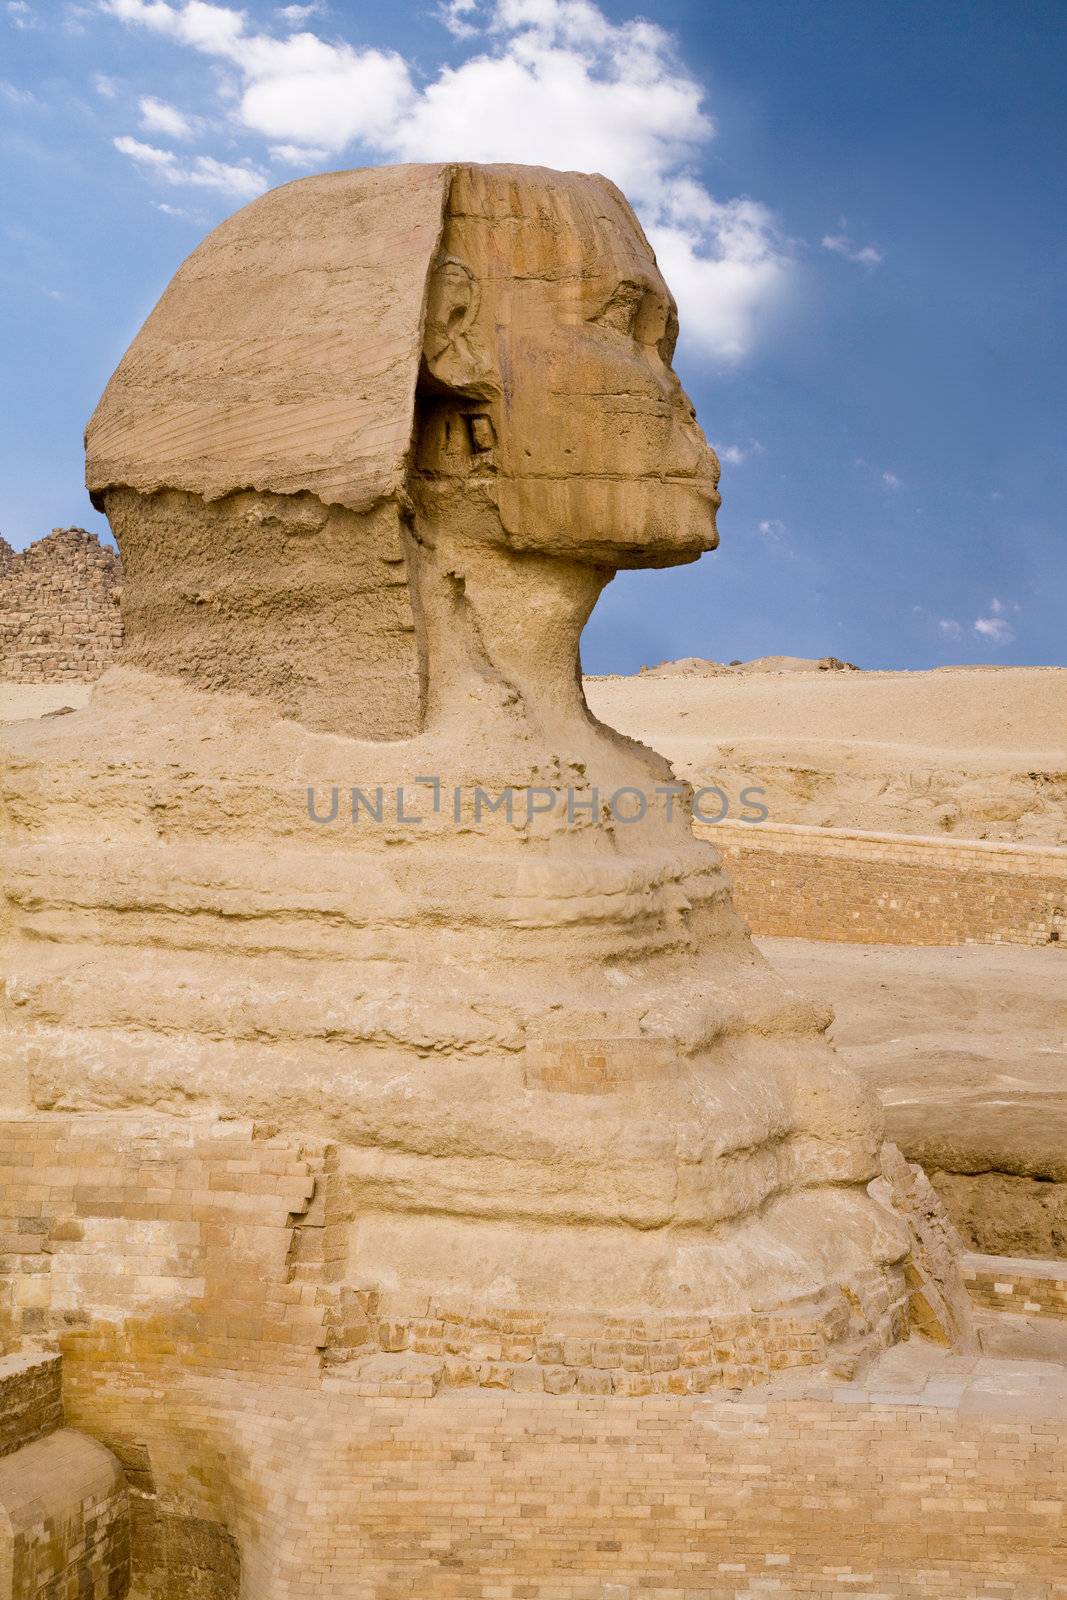 Egyptian Sphinx by Gbuglok